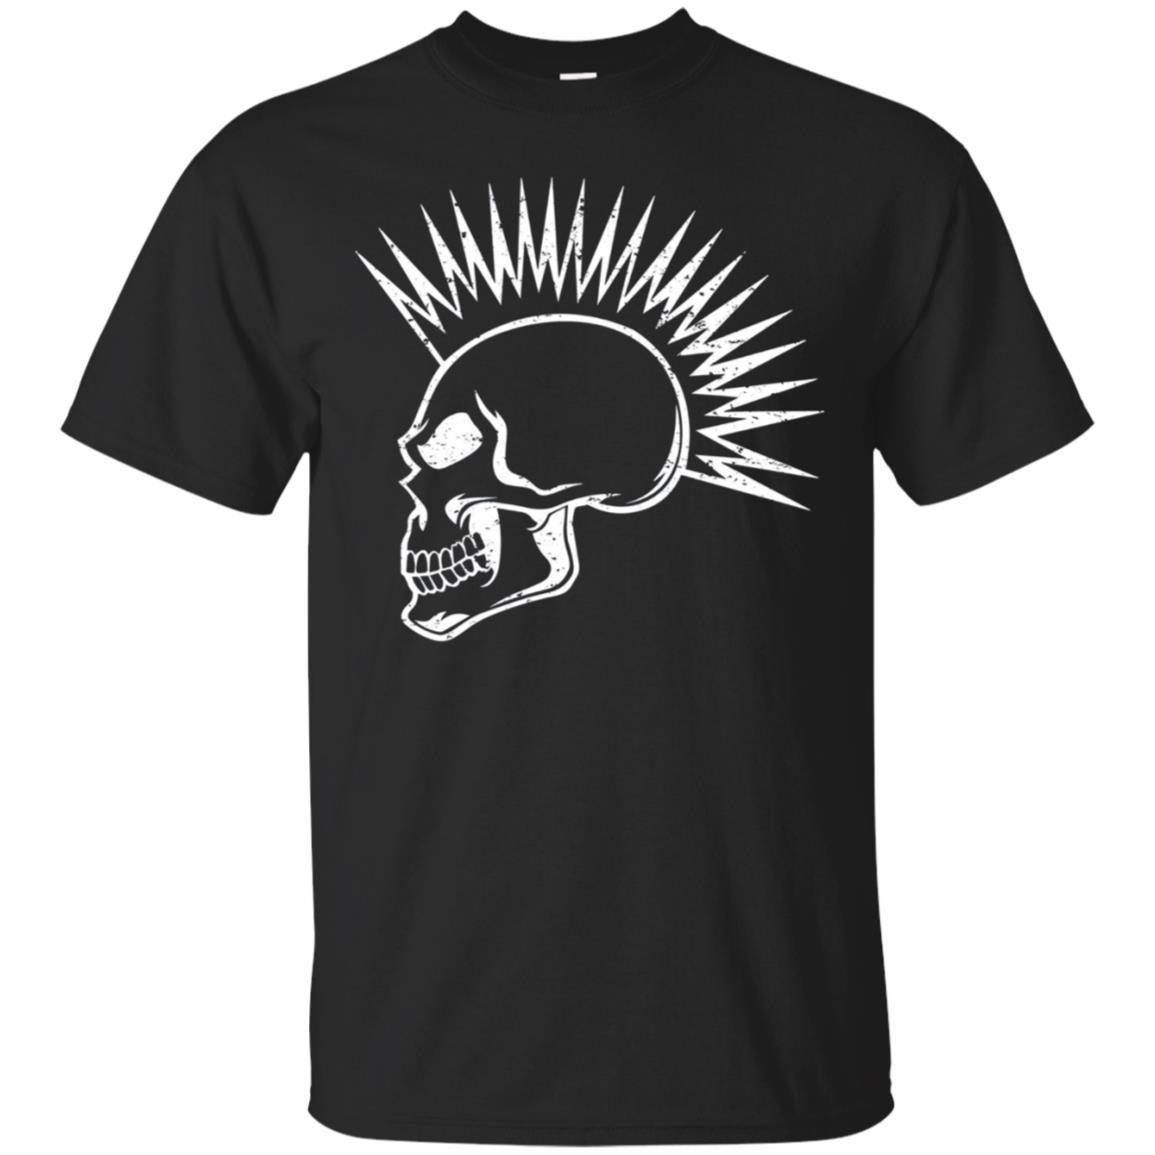 Mohawk Skull T-shirt